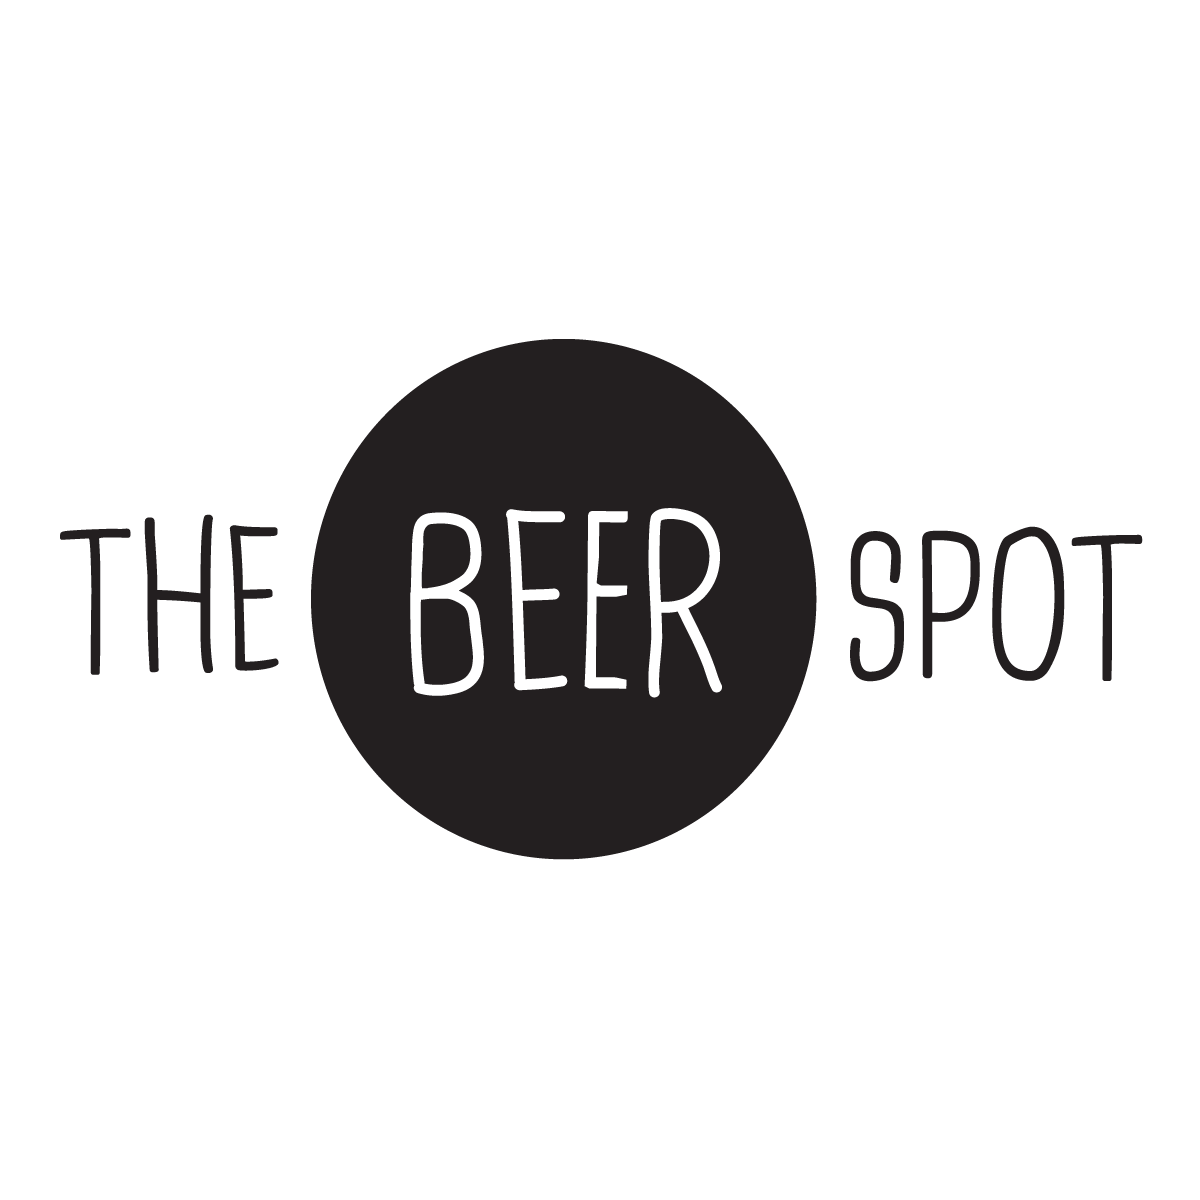 the beer spot logo